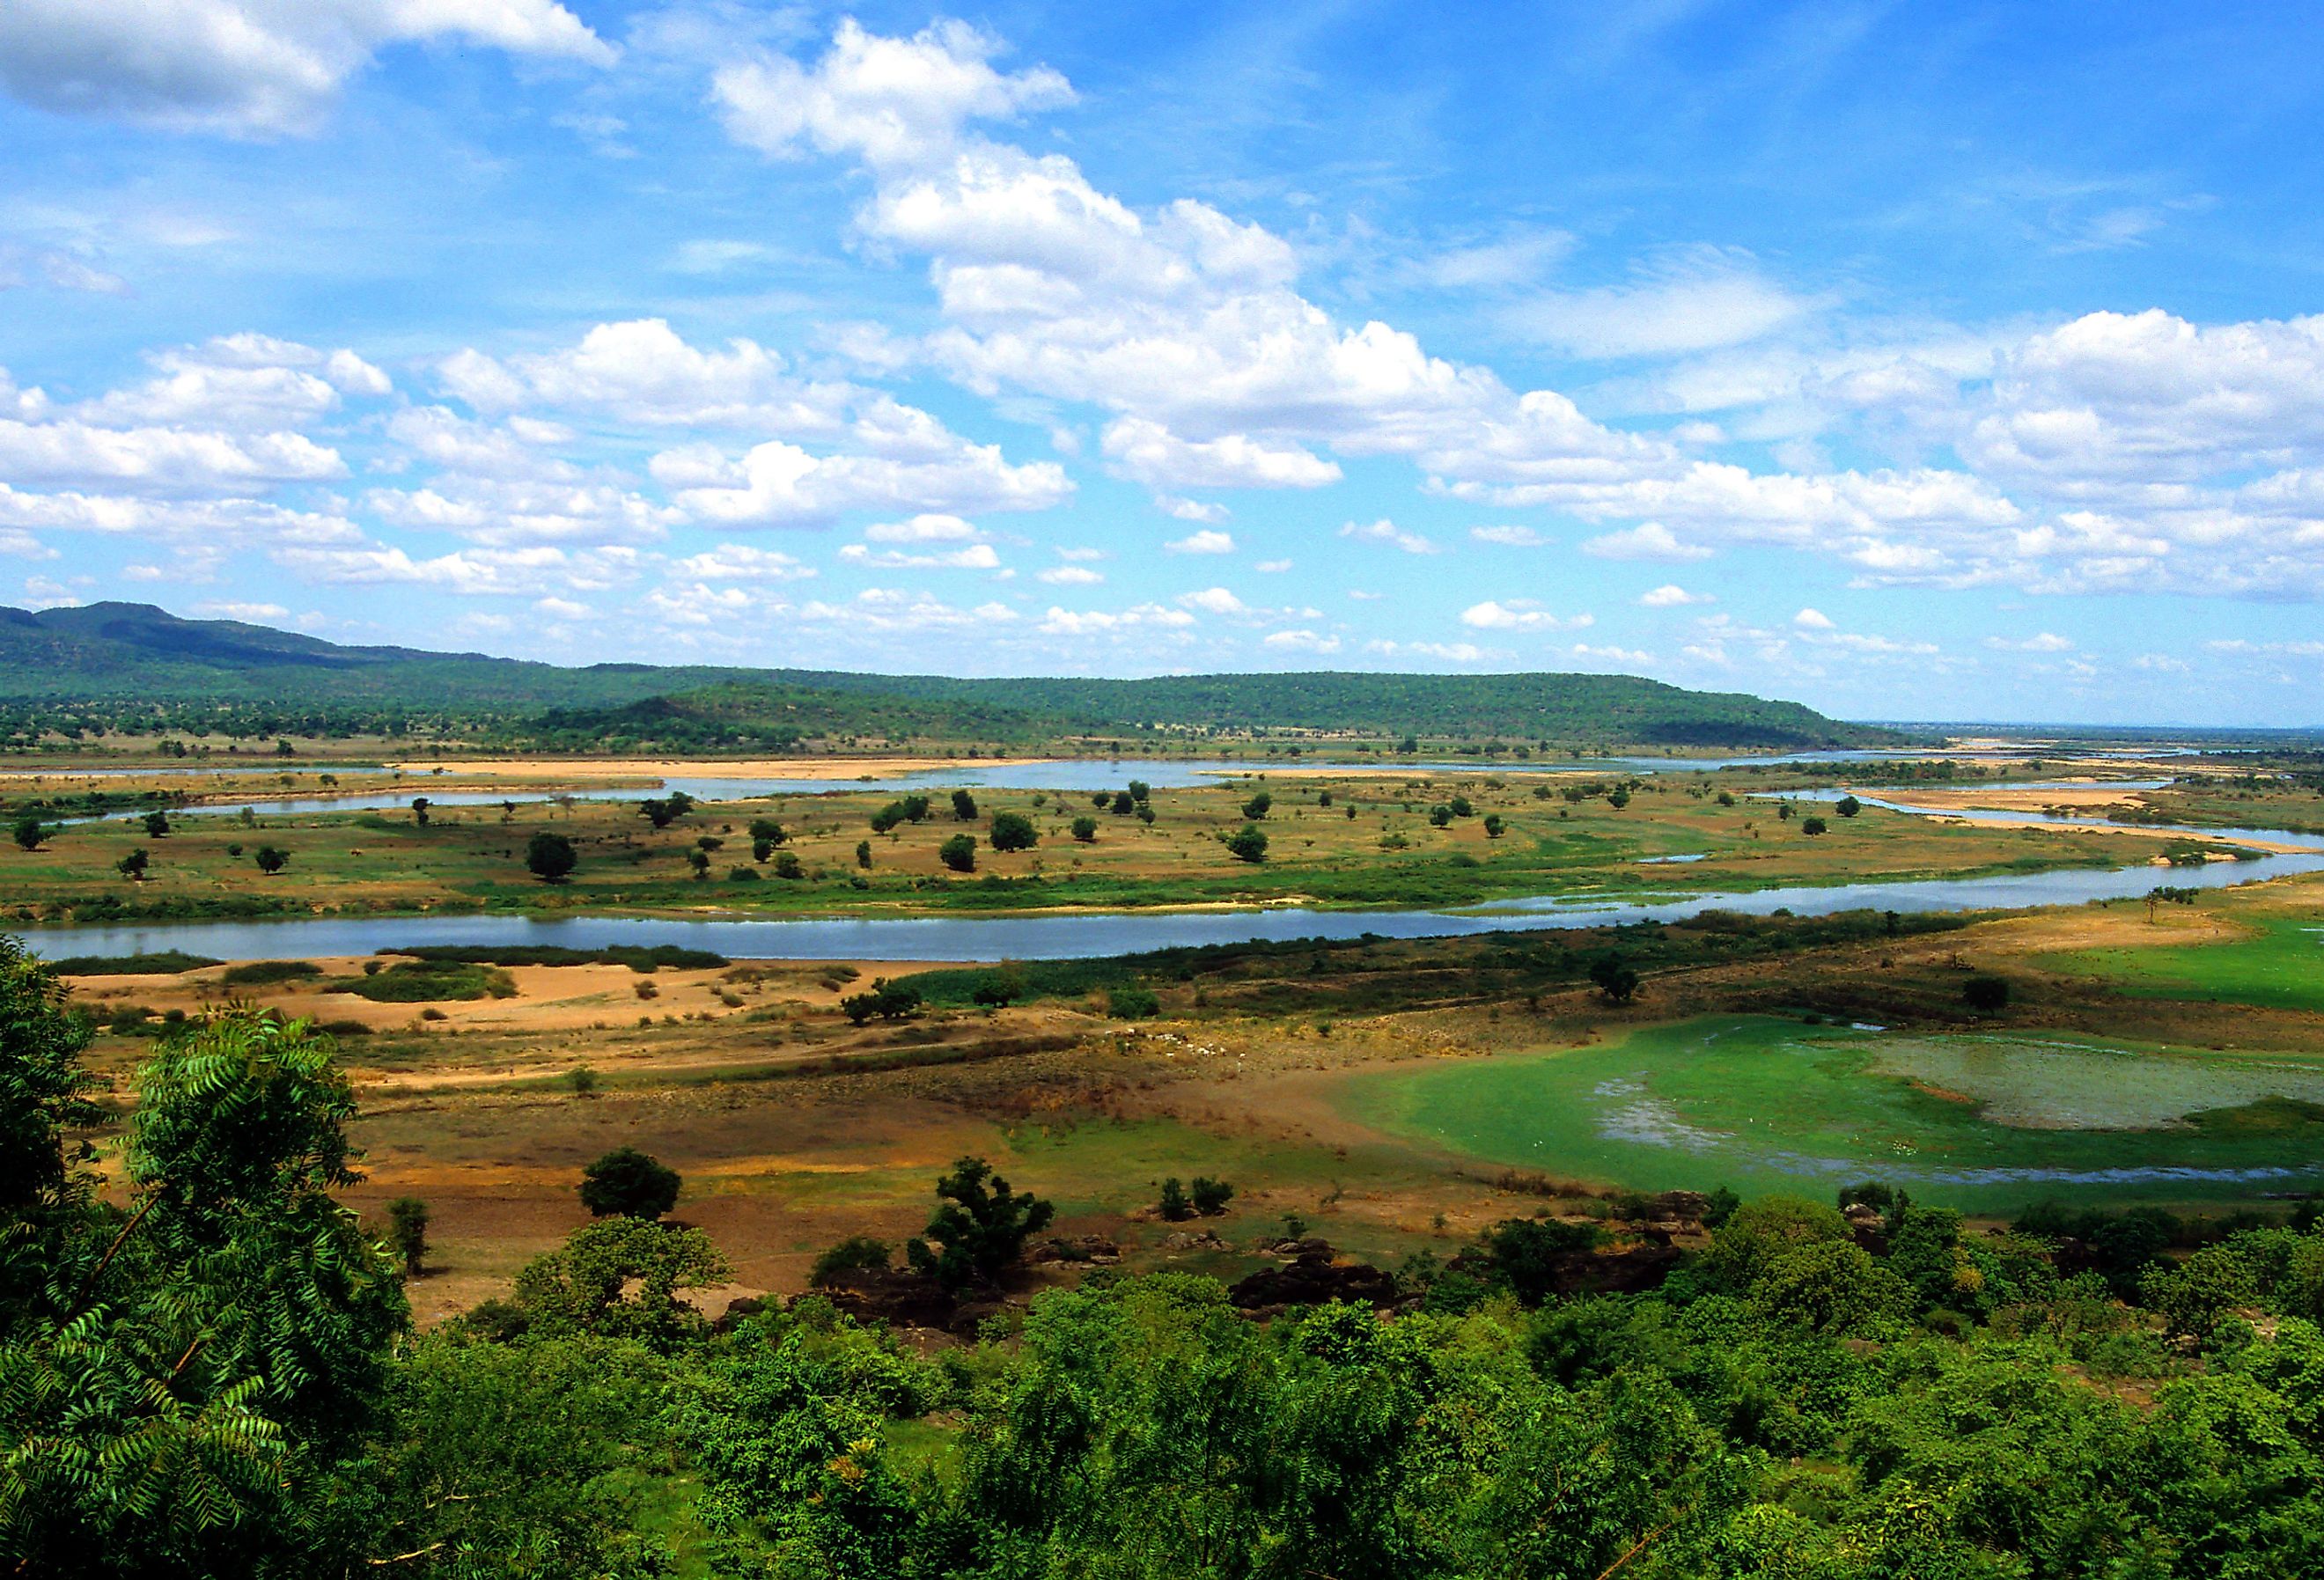 The River Benue as it passes through Adamawa State in N.E. Nigeria near Jimeta-Yola and close to the Cameroon border. Image credit Adamawa via Shutterstock.